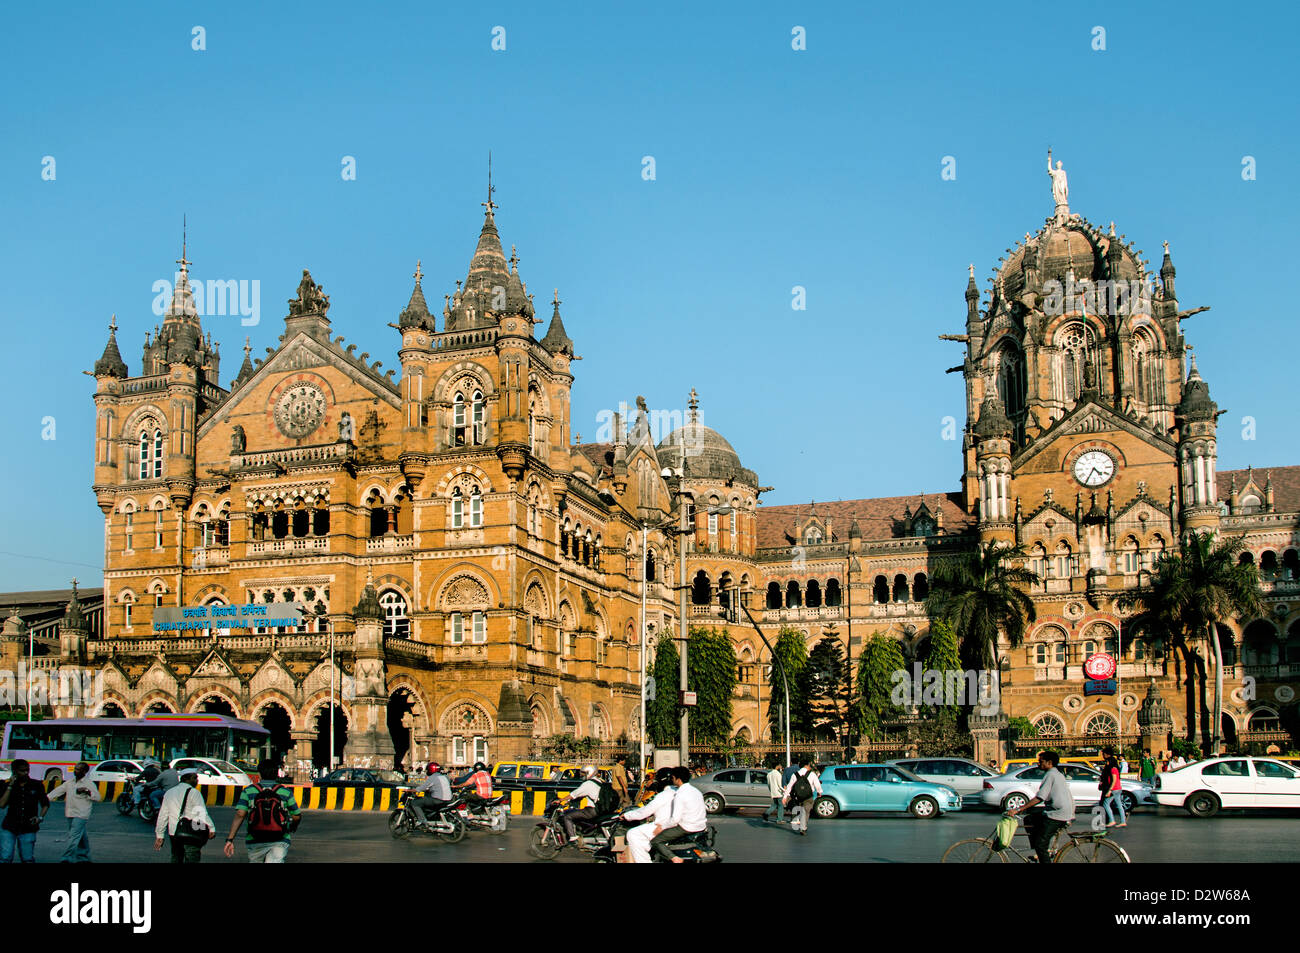 The Chhatrapati Shivaji Terminus (  Victoria Terminus ) Station Mumbai ( Bombay ) Victorian Gothic Revival architecture India Stock Photo